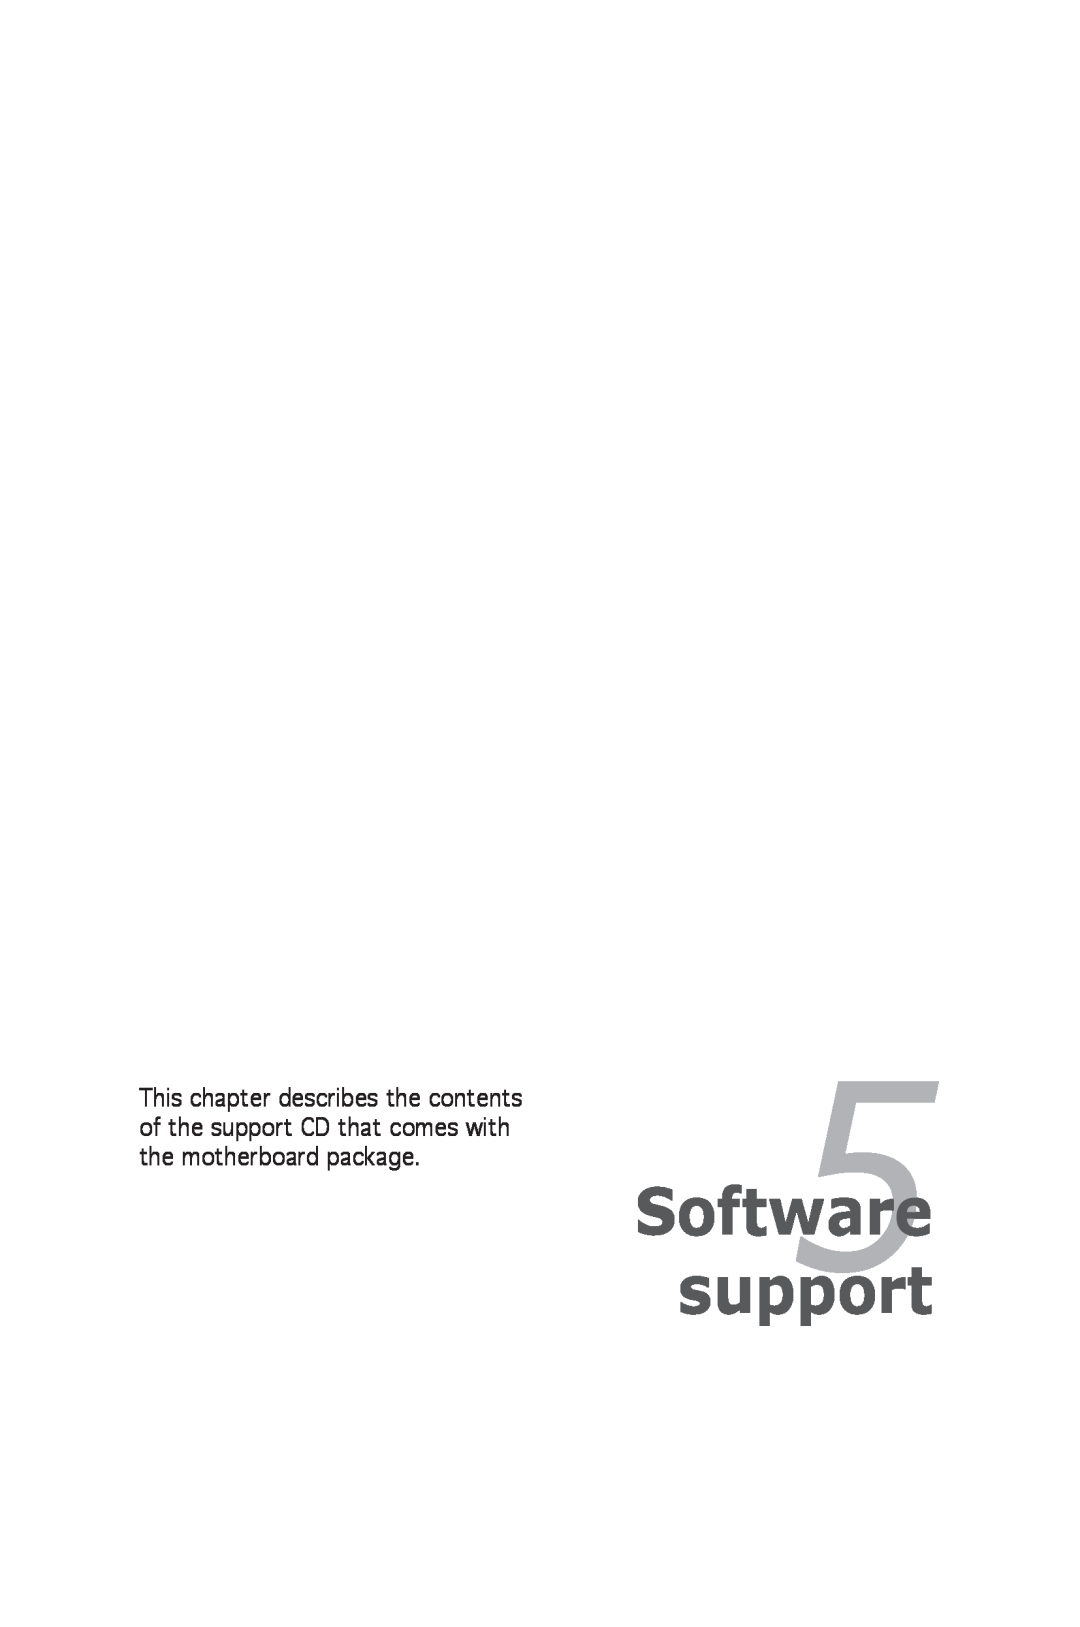 Asus A8N-SLI SE manual Software5 support 